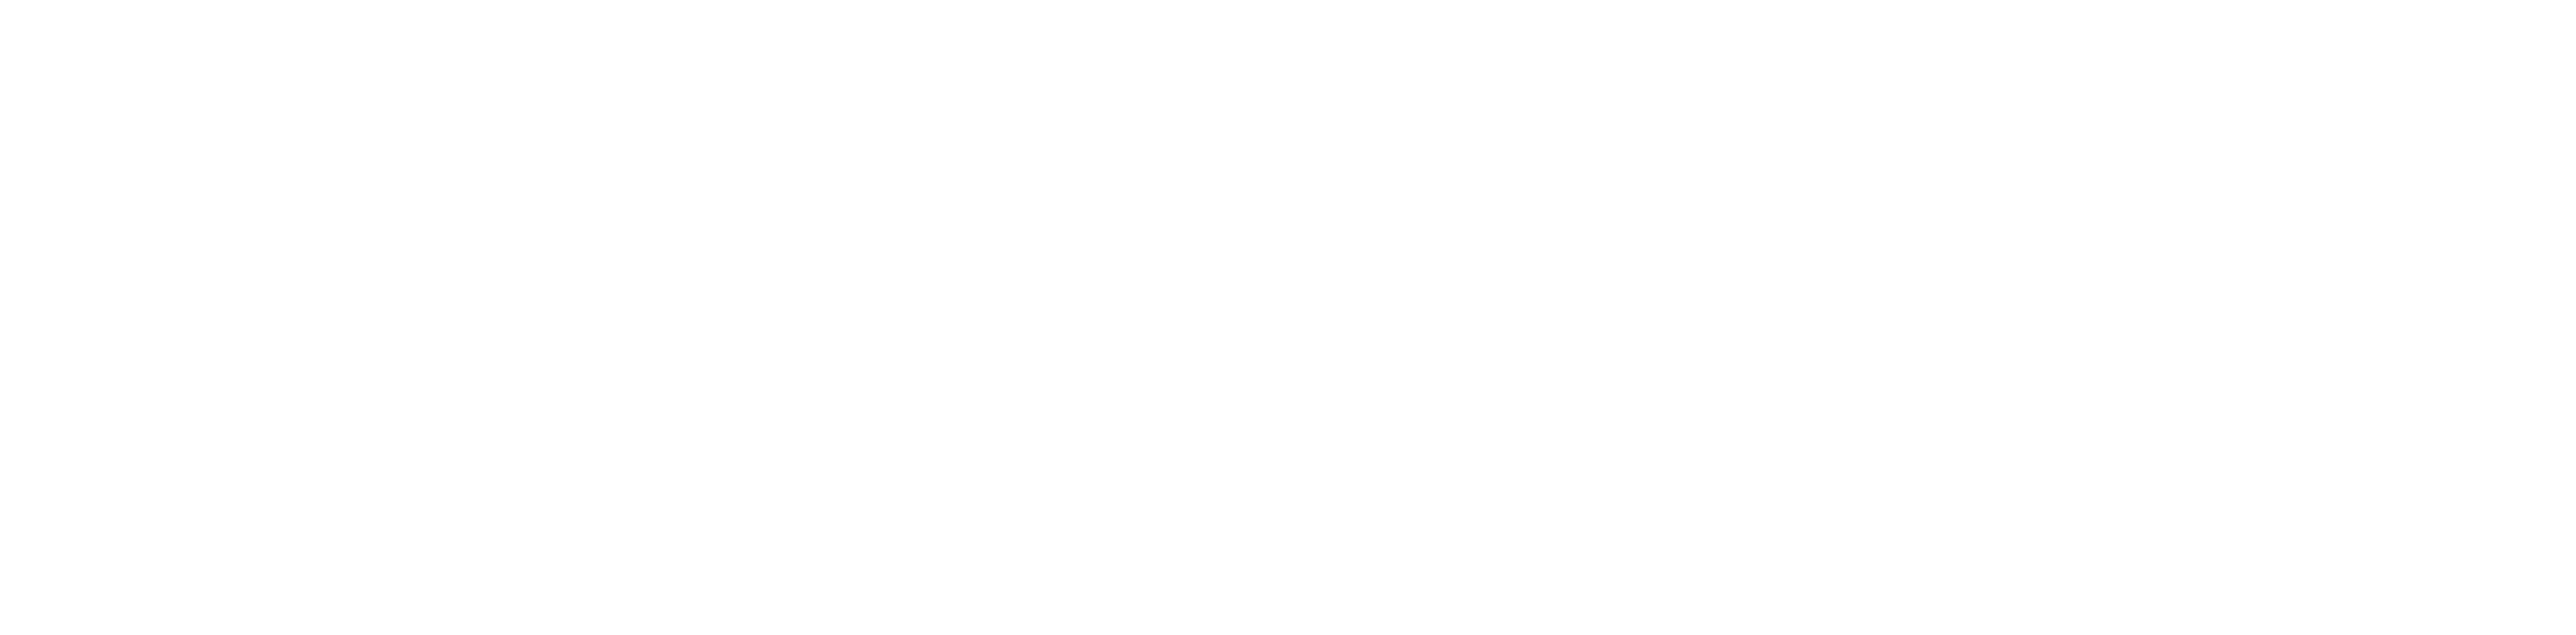 Alice L Walton Foundation reverse logo no background